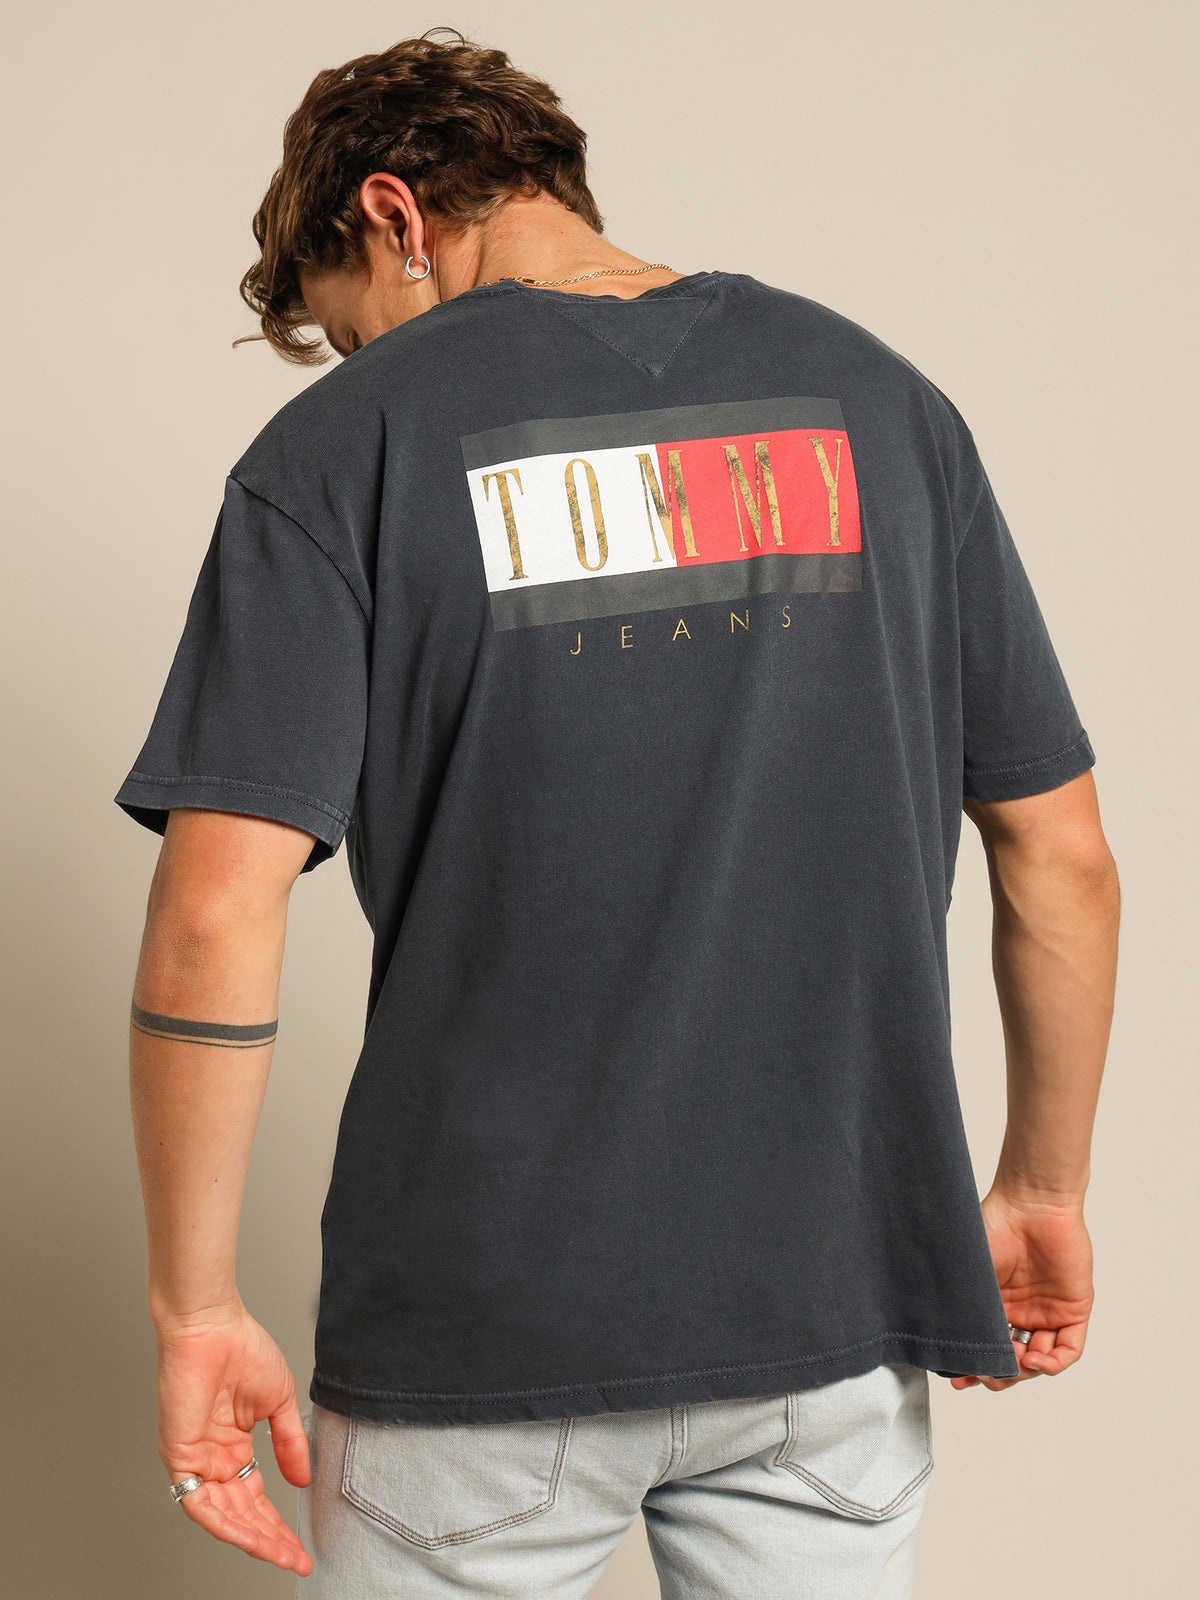 Vintage Flag Print T-Shirt in Navy Blue